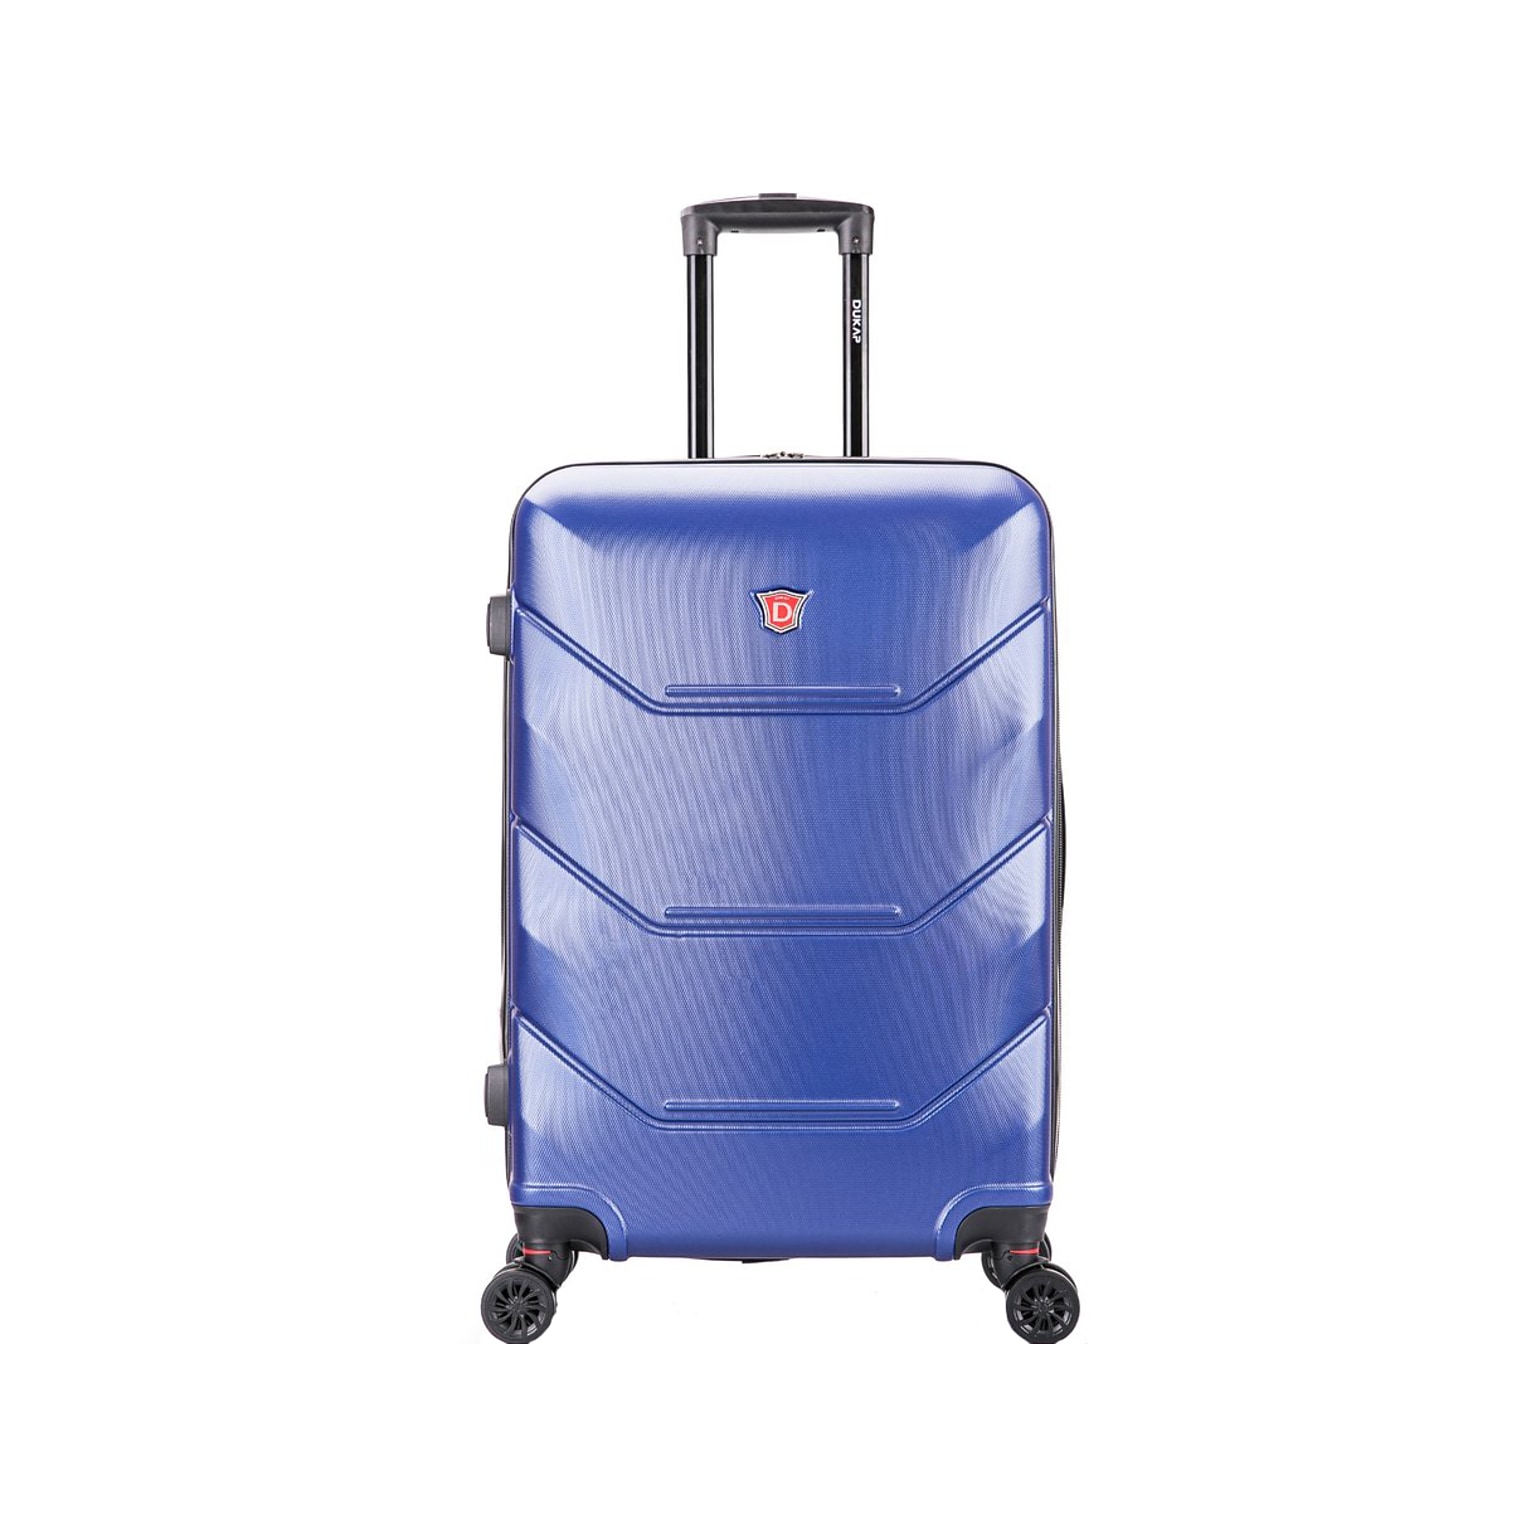 DUKAP Zonix 28.35 Hardside Suitcase, 4-Wheeled Spinner, Blue (DKZON00M-BLU)